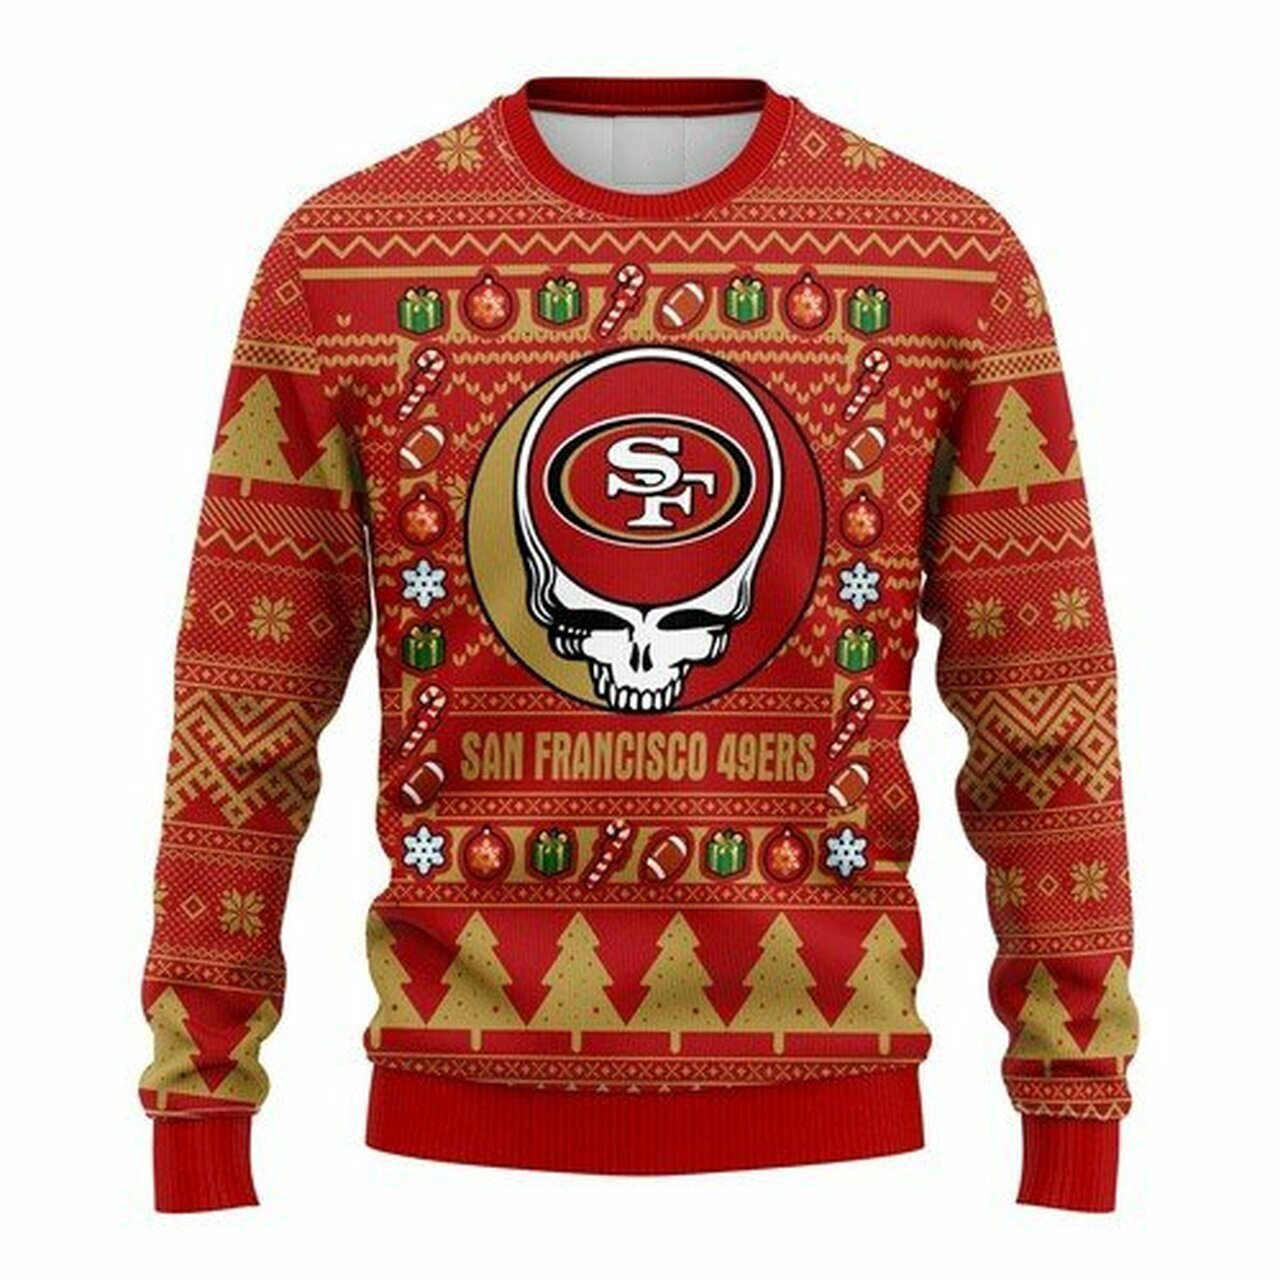 NFL San Francisco 49ers Grateful Dead ugly christmas sweater